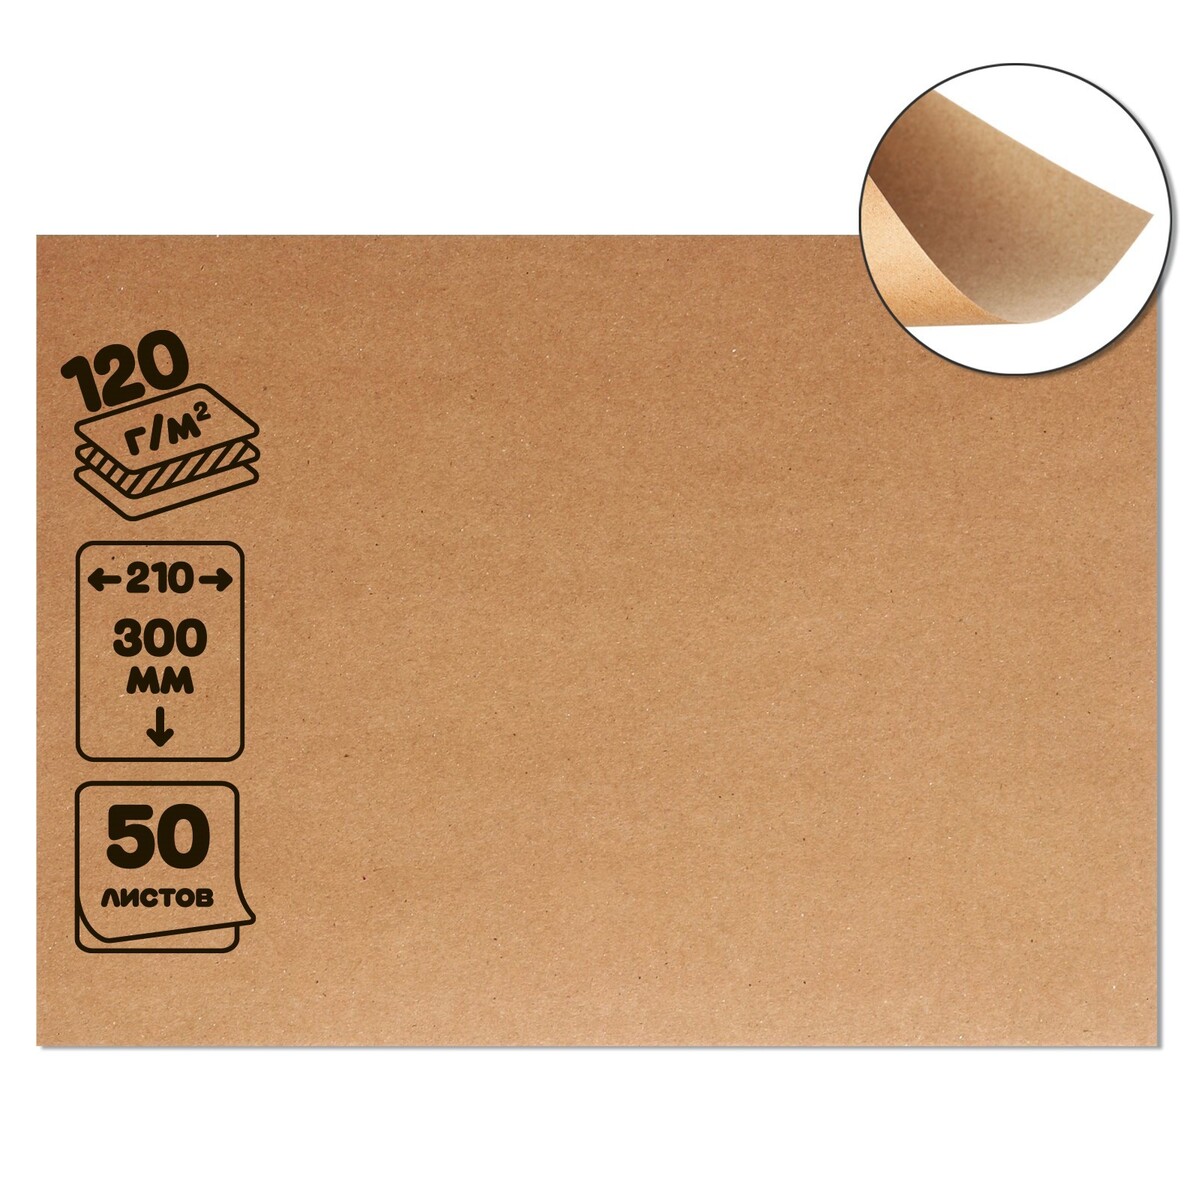 Крафт-бумага, 210 х 300 мм, 120 г/м2, набор 50 листов, коричневая/серая коробка складная под 5 конфет крафт 5 х 22 х 3 5 см набор 5 шт